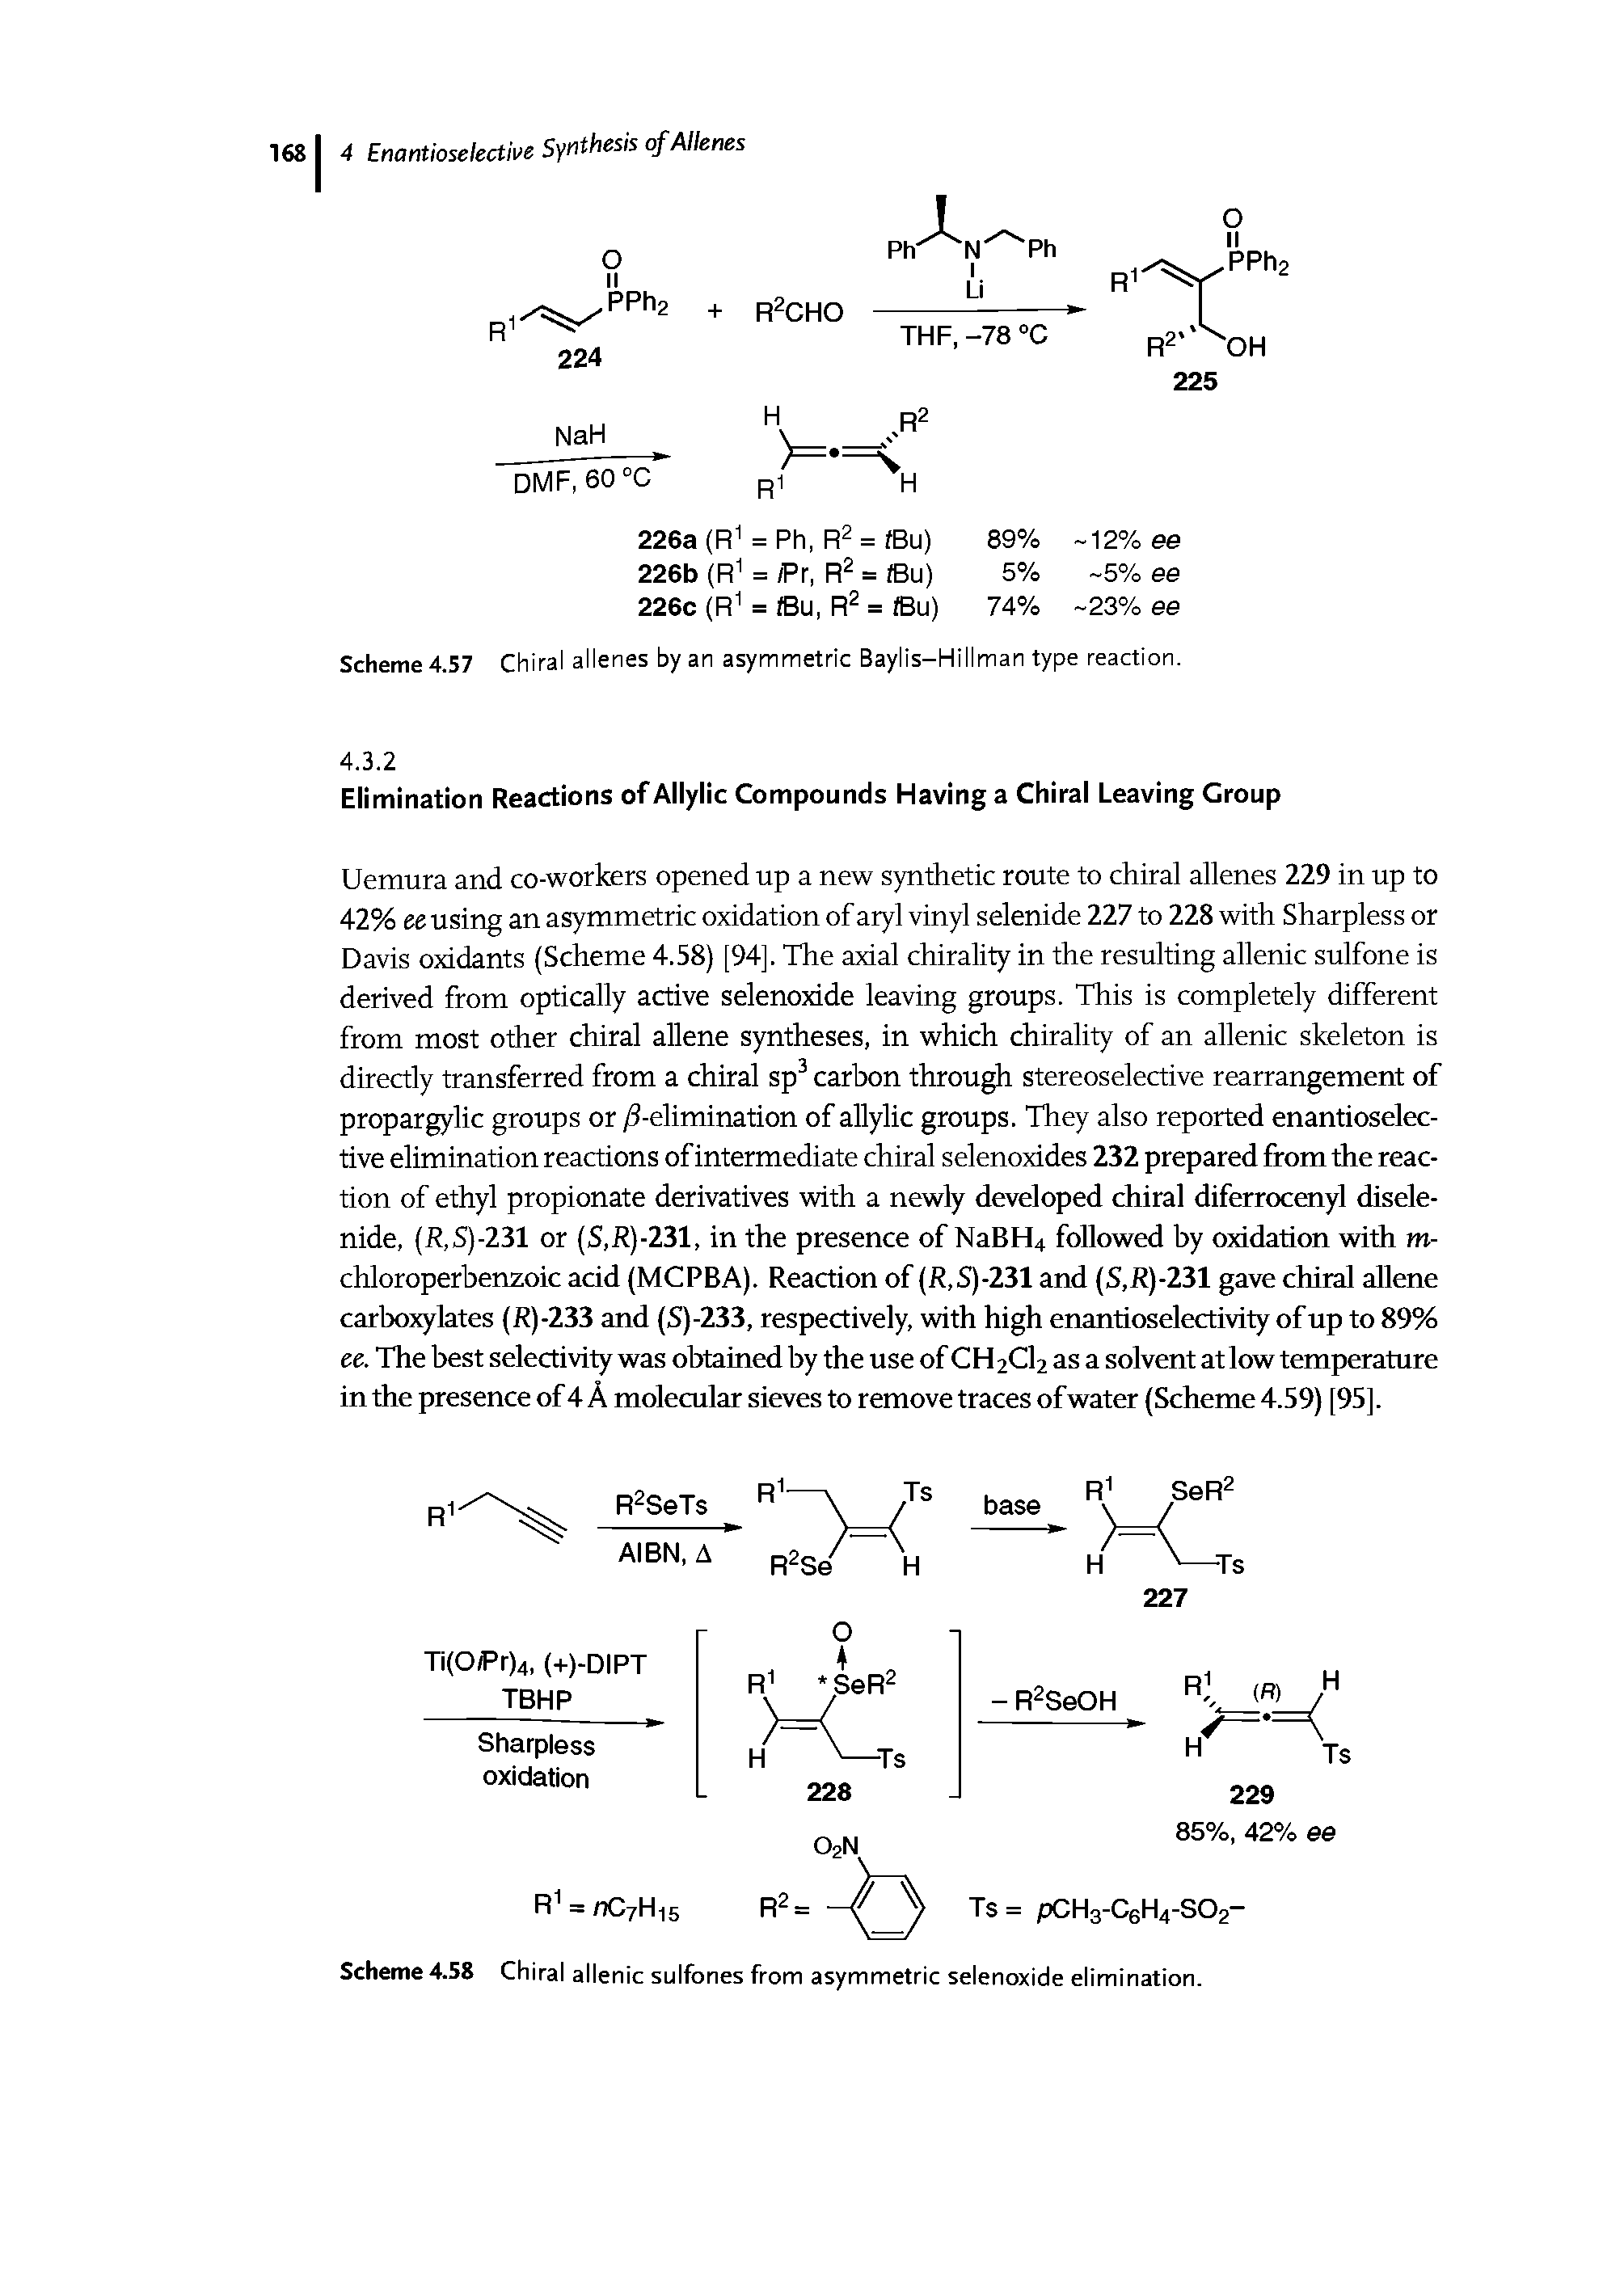 Scheme 4.58 Chiral allenic sulfones from asymmetric selenoxide elimination.